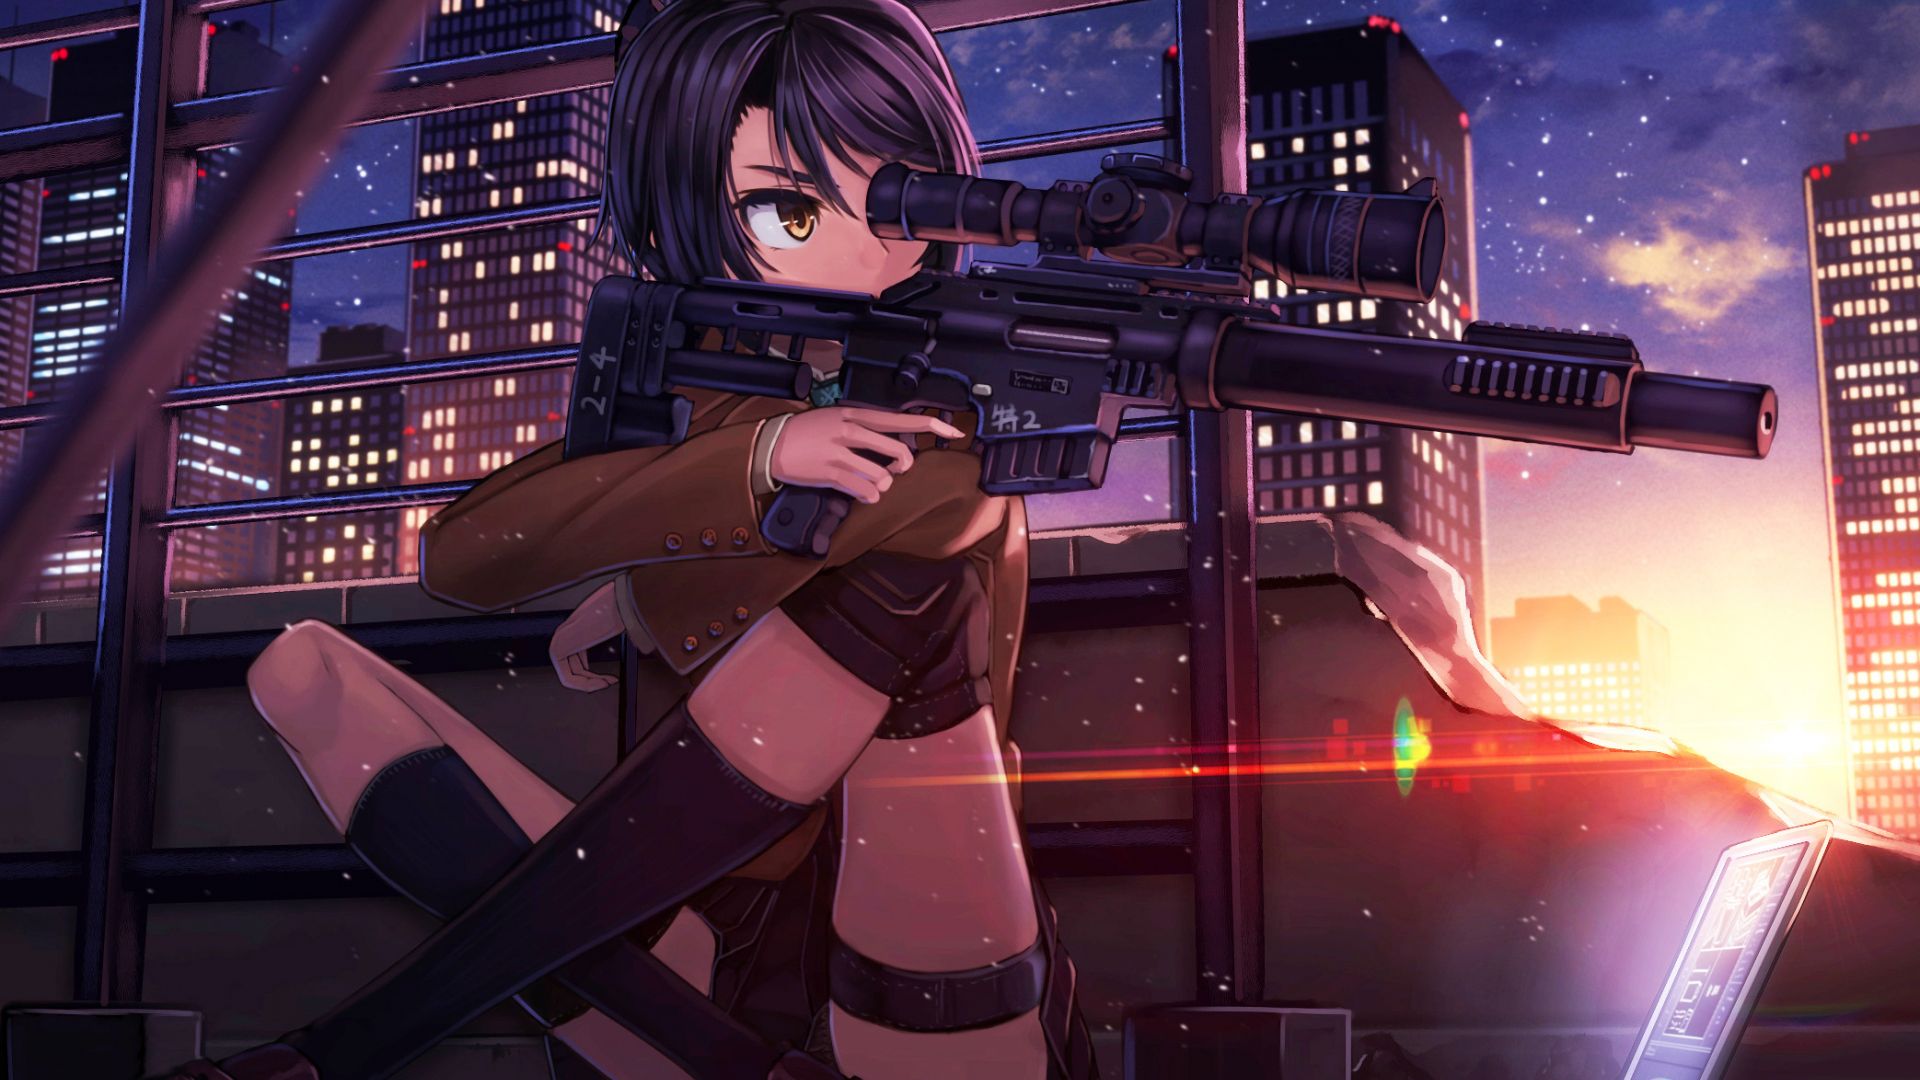 Anime Girls With Guns / girls with guns on Tumblr